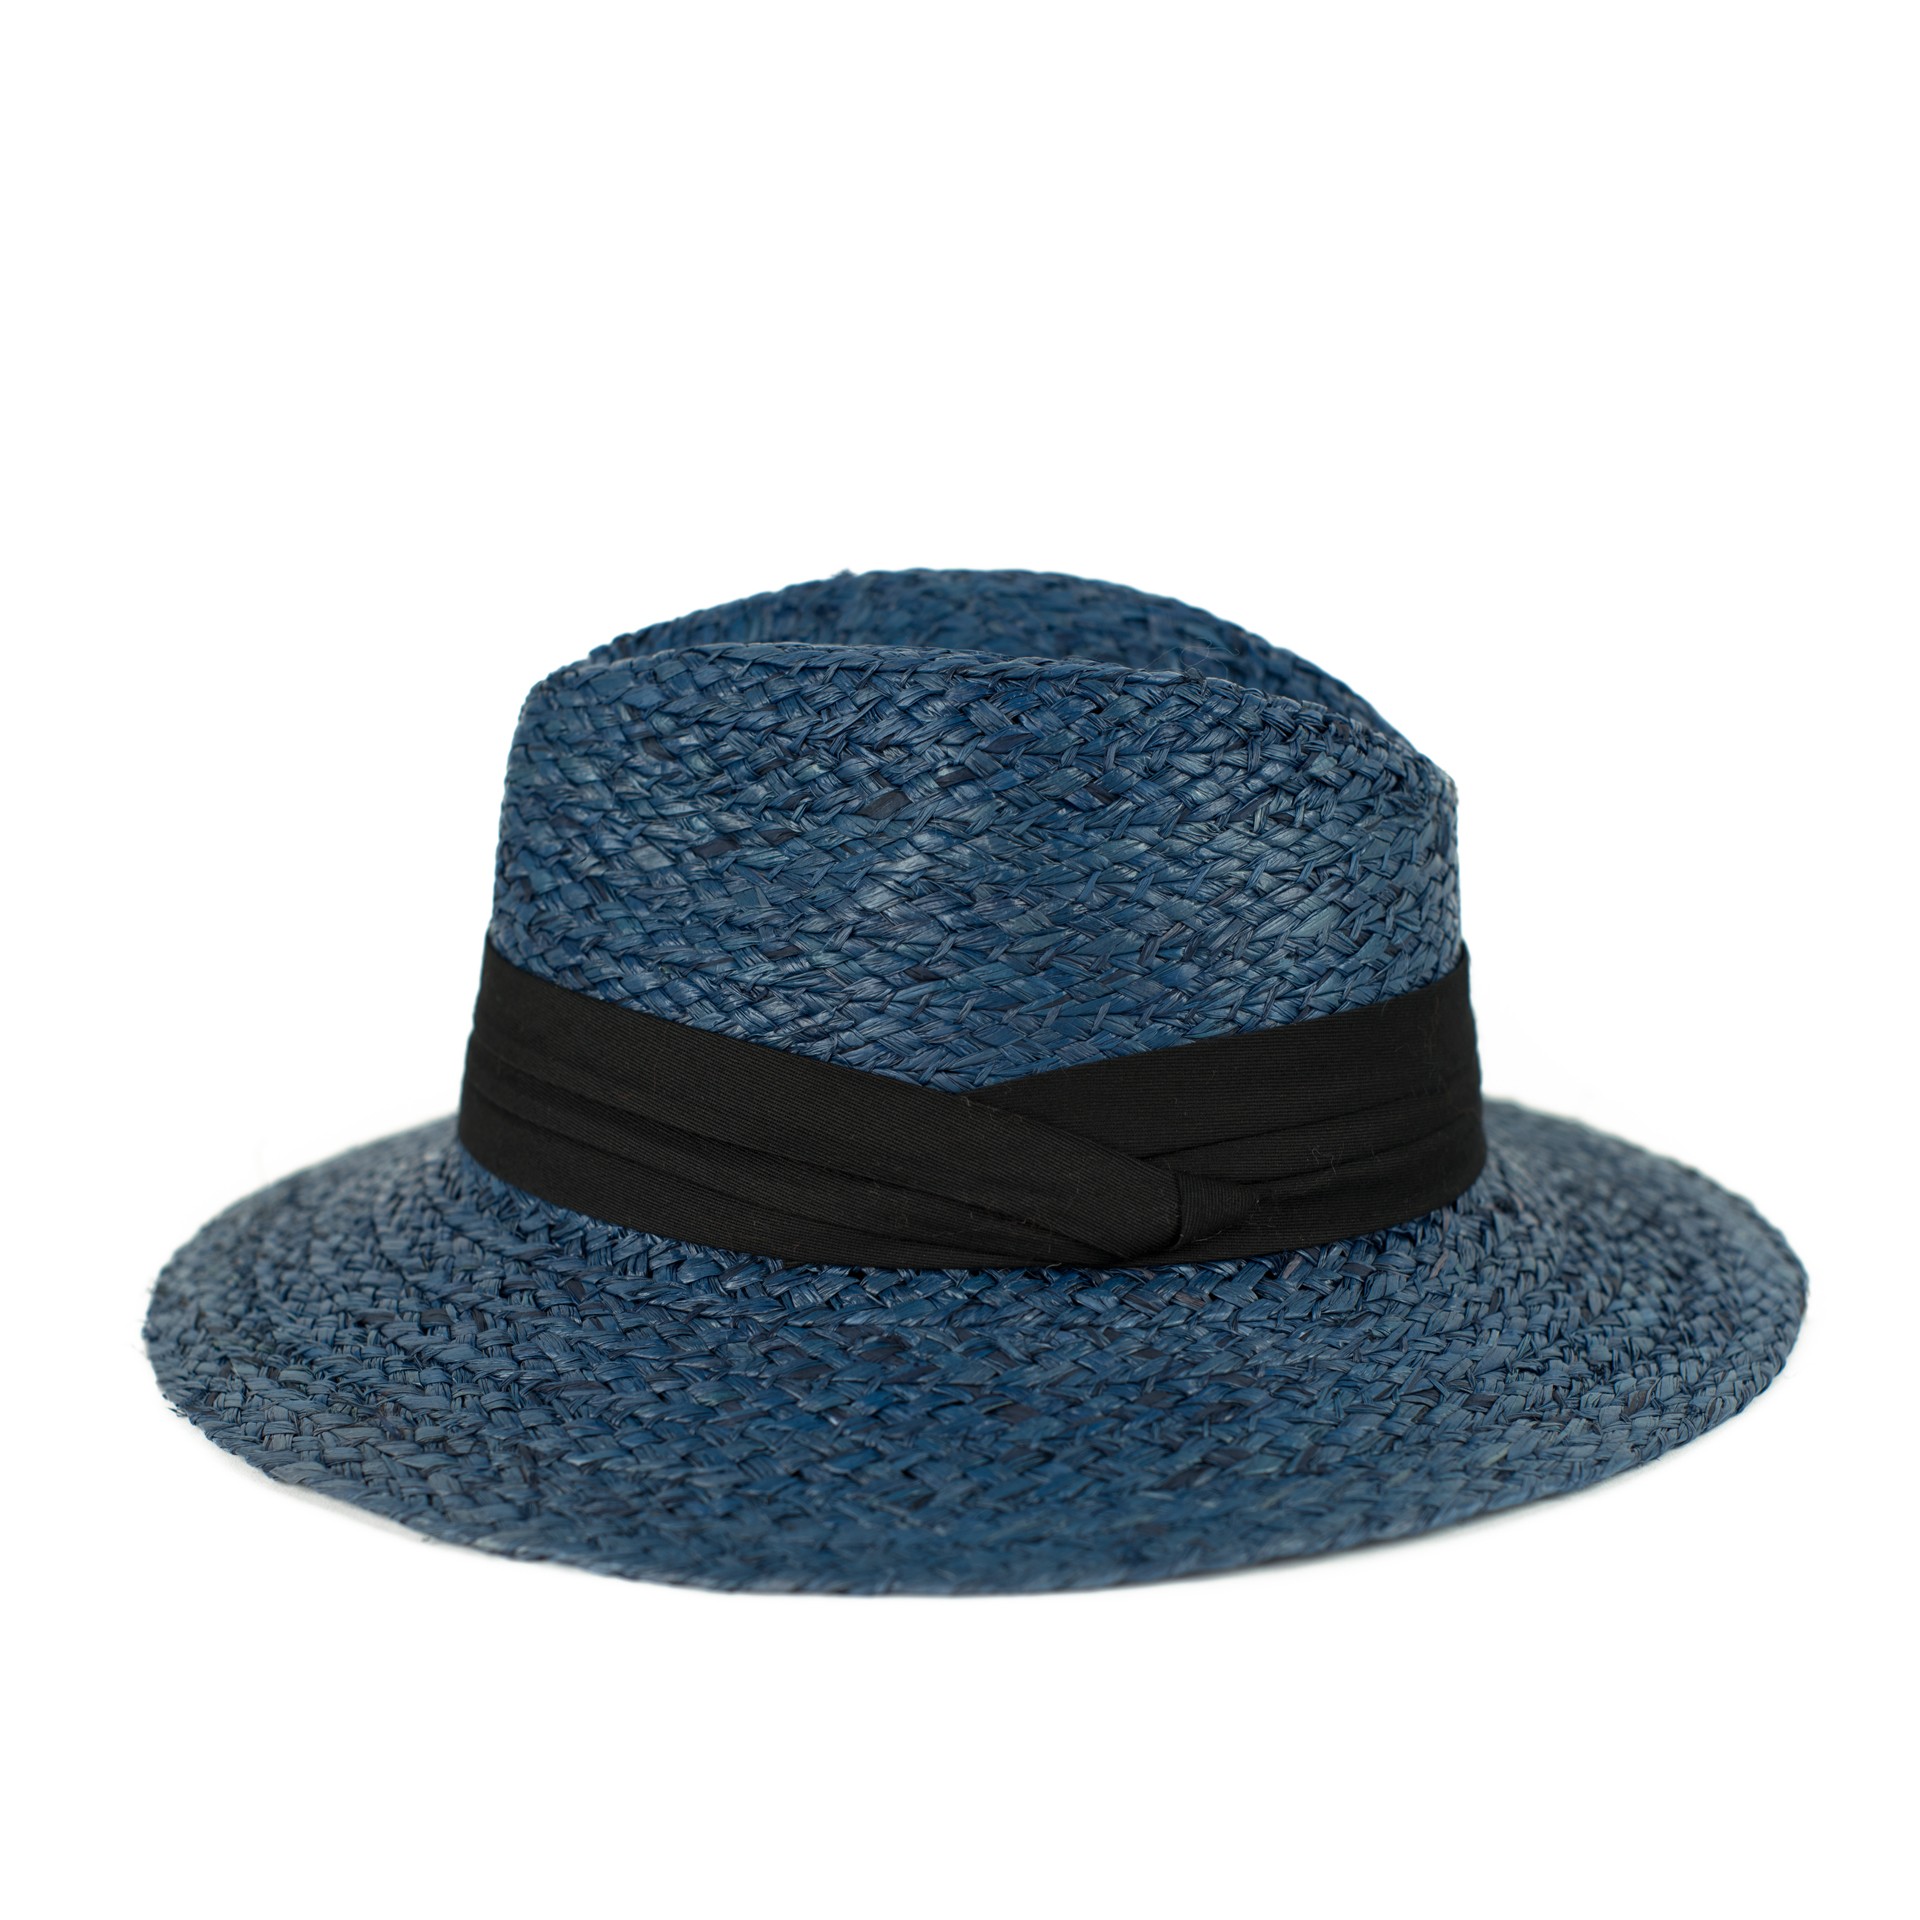 Art Of Polo Unisex's Hat cz21168-4 Navy Blue